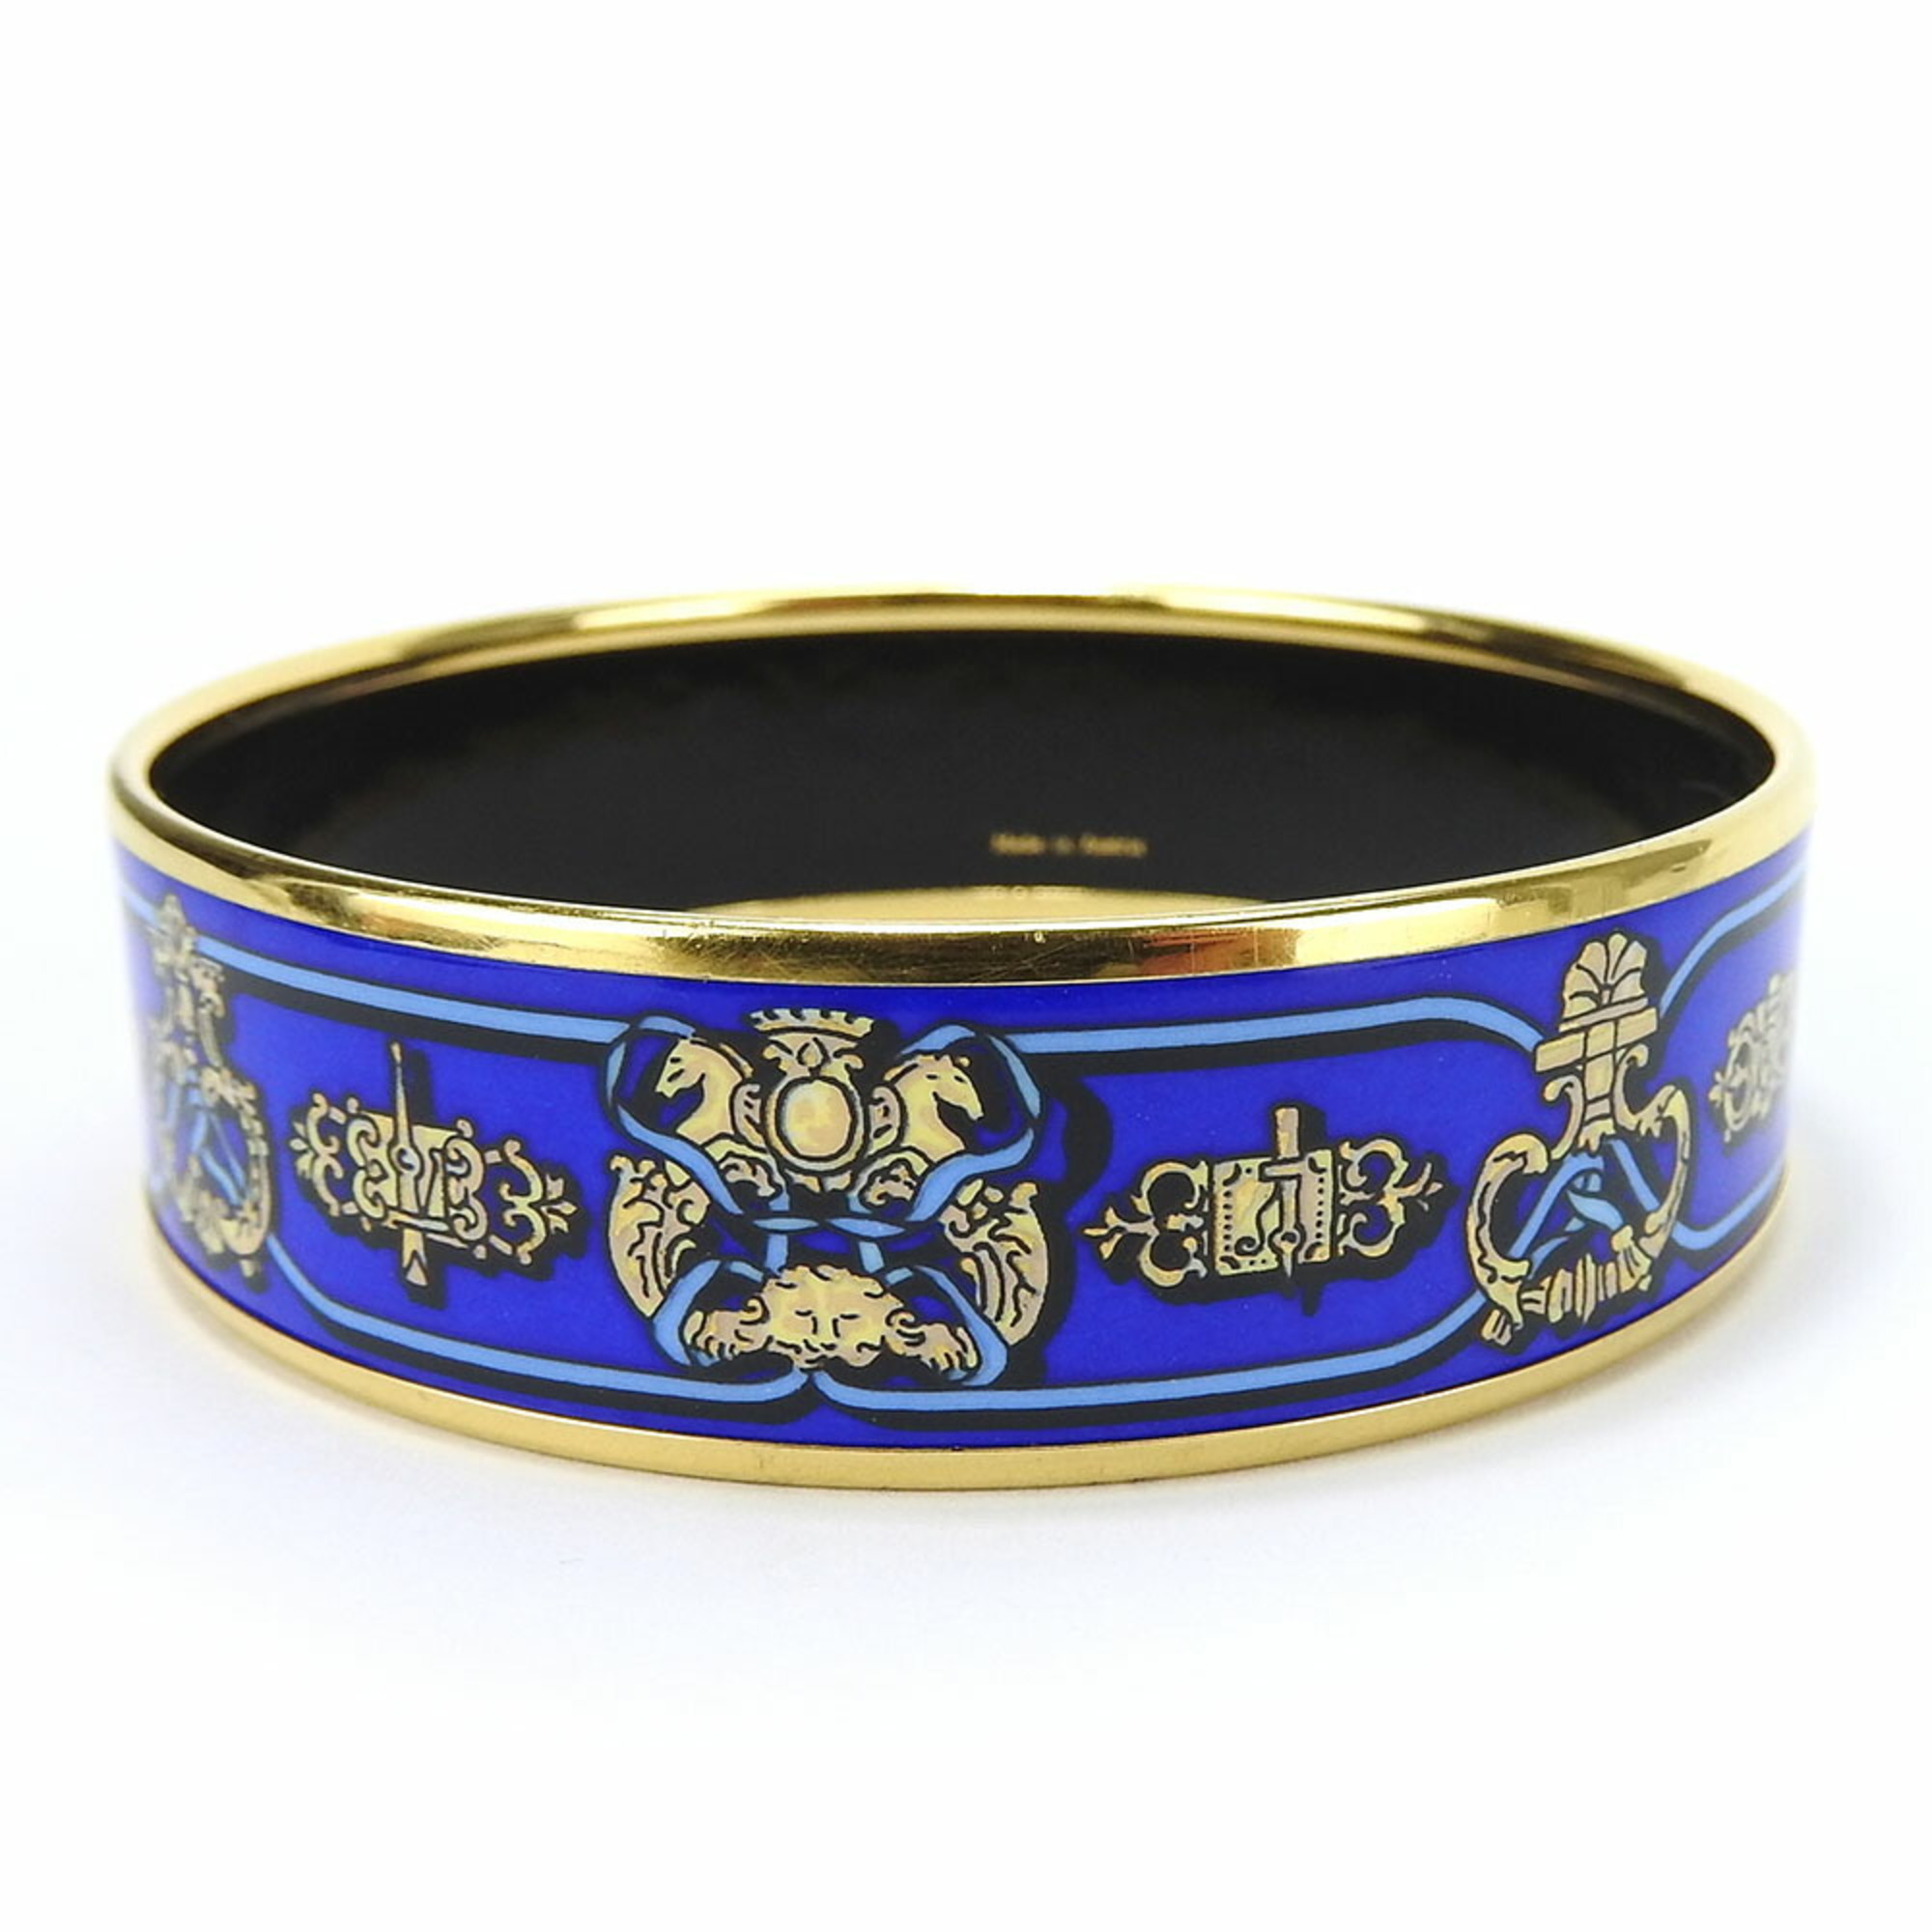 Hermes bracelet enamel metal cloisonné multicolor blue gold bangle for women HERMES